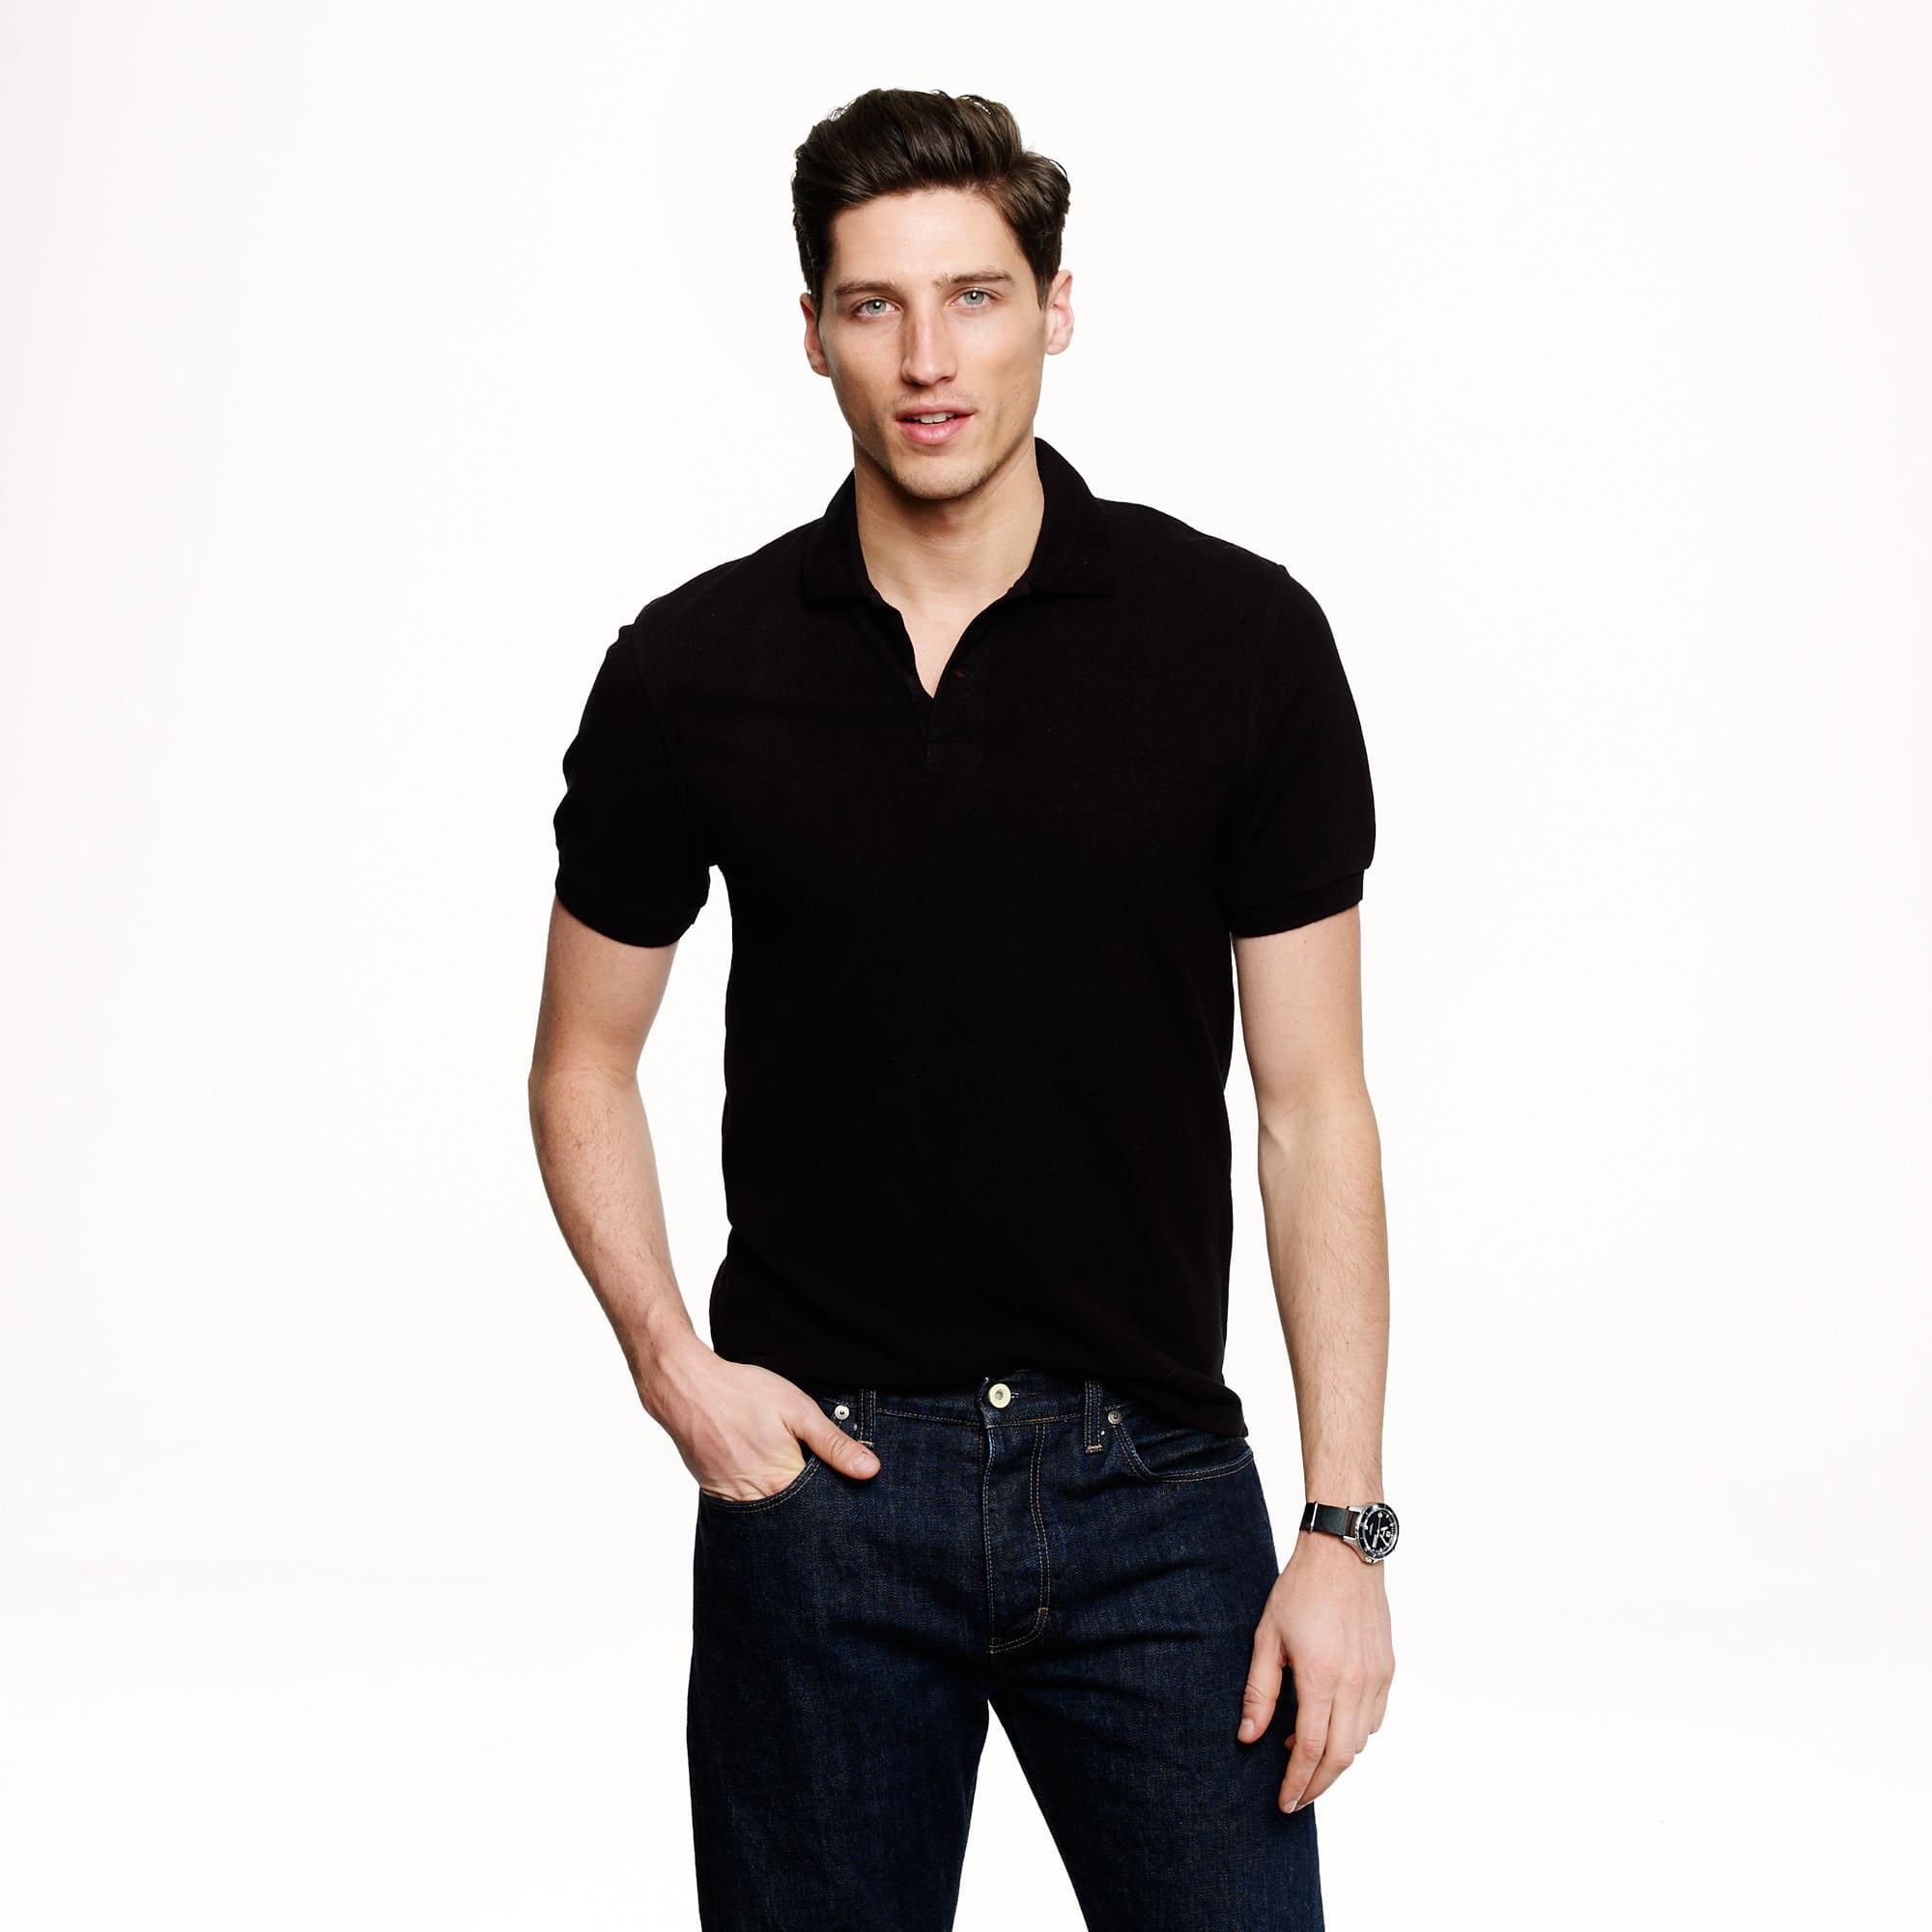 J.Crew Slim Classic Piqué Polo Shirt in Black for Men - Lyst